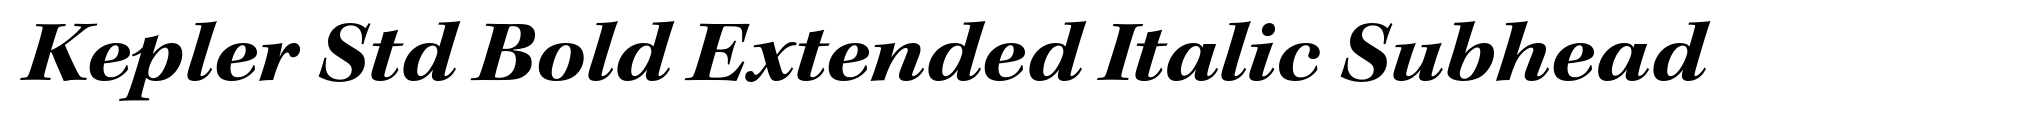 Kepler Std Bold Extended Italic Subhead image